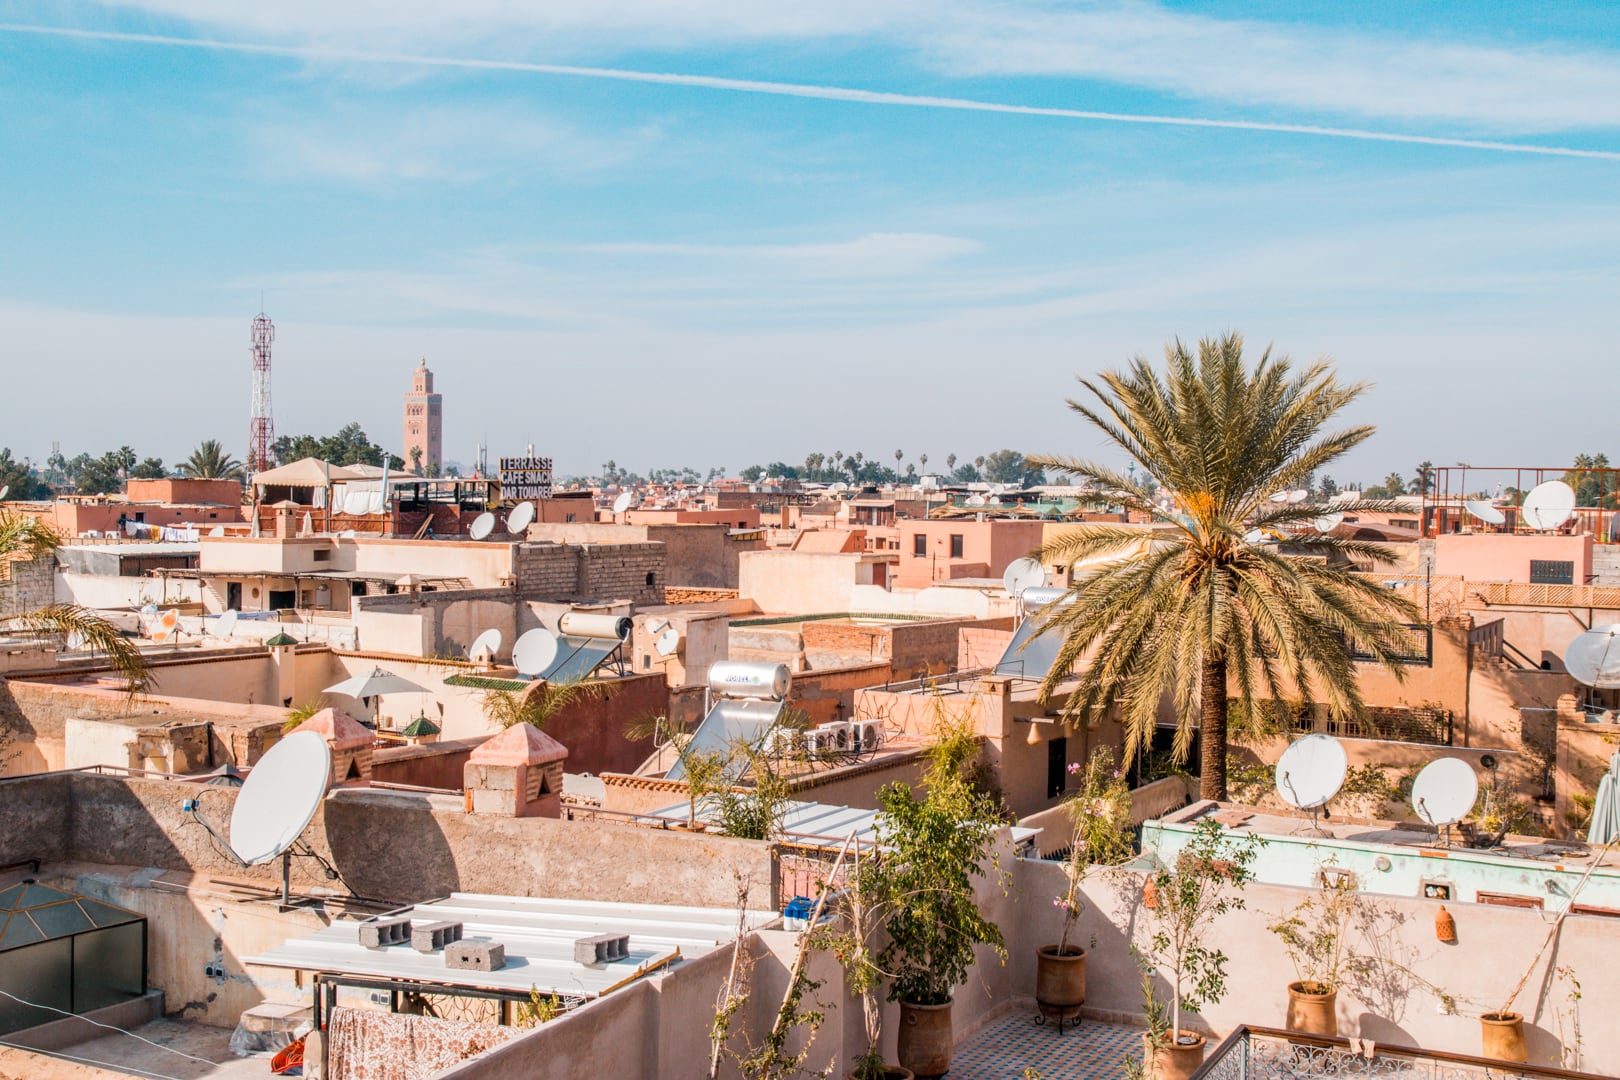 Marrakech El Badii Palace7 - De 18 beste winterzon bestemmingen: in Europa en verder weg!